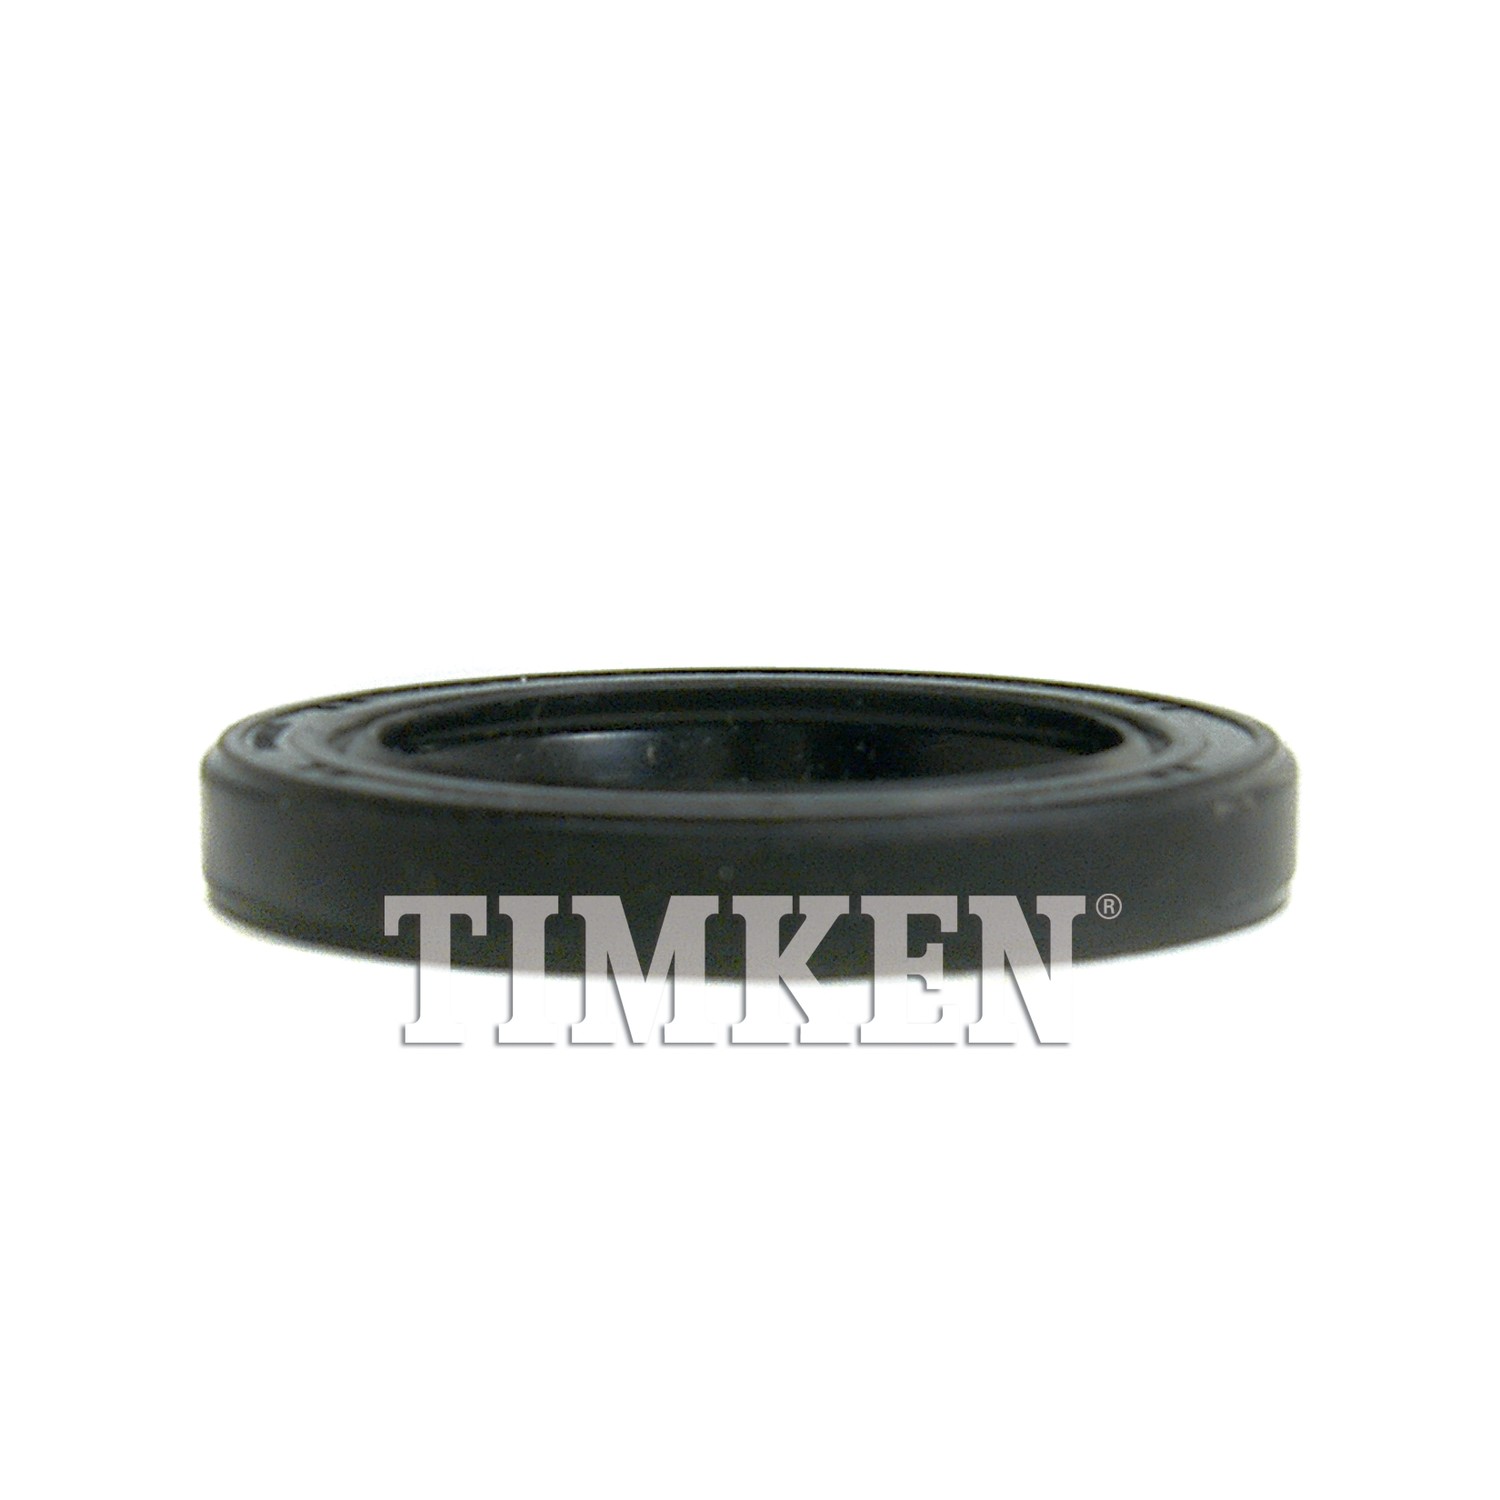 TIMKEN - Auto Trans Torque Converter Seal - TIM 223830